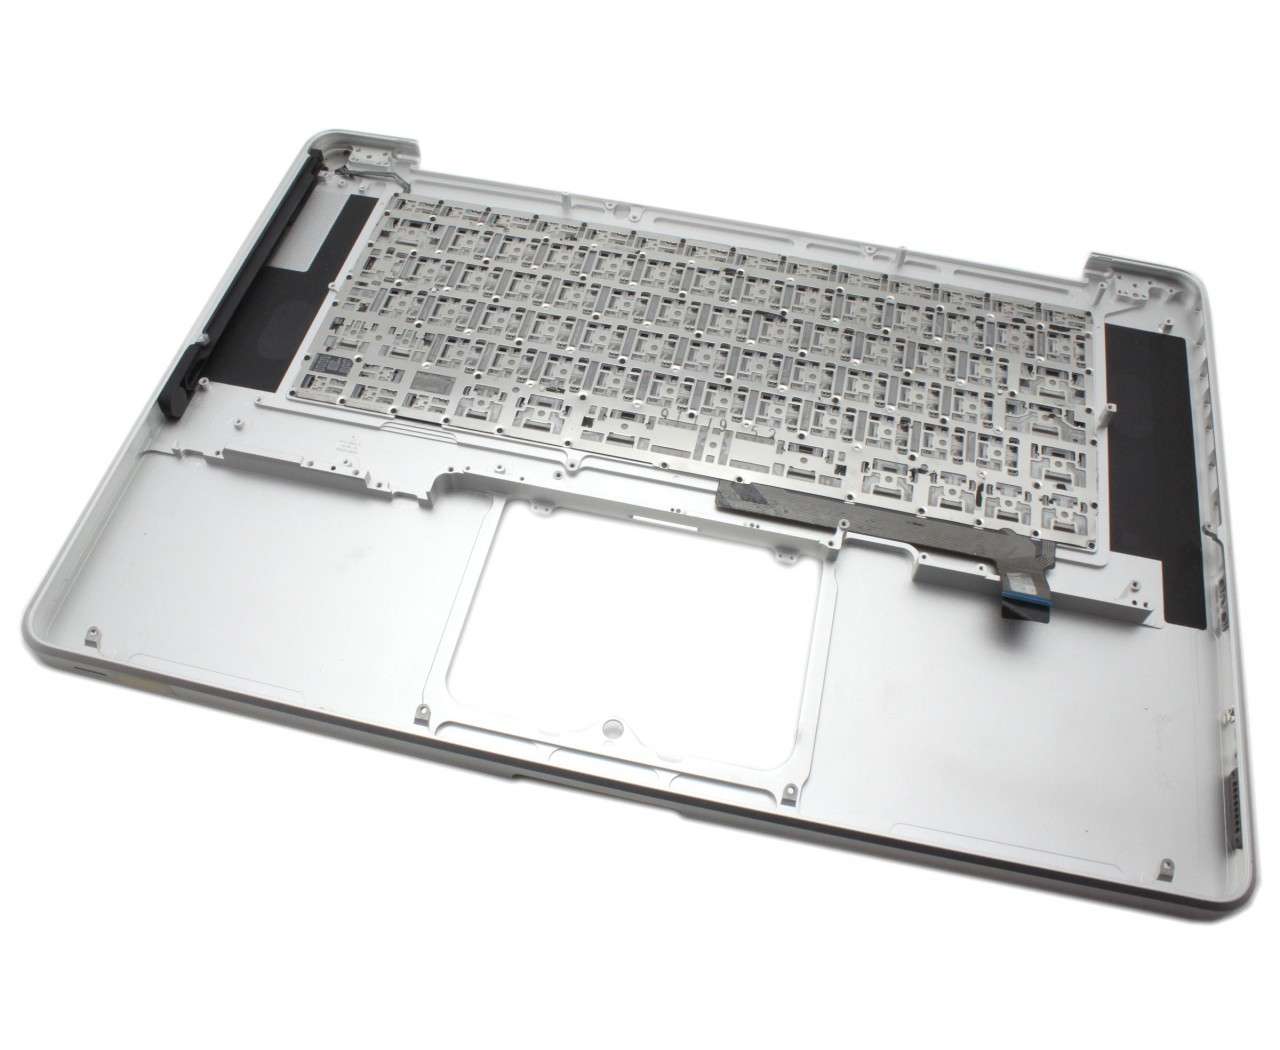 Tastatura Apple MacBook Pro 15 A1286 2009 Neagra cu Palmrest Argintiu Refurbished Apple Apple